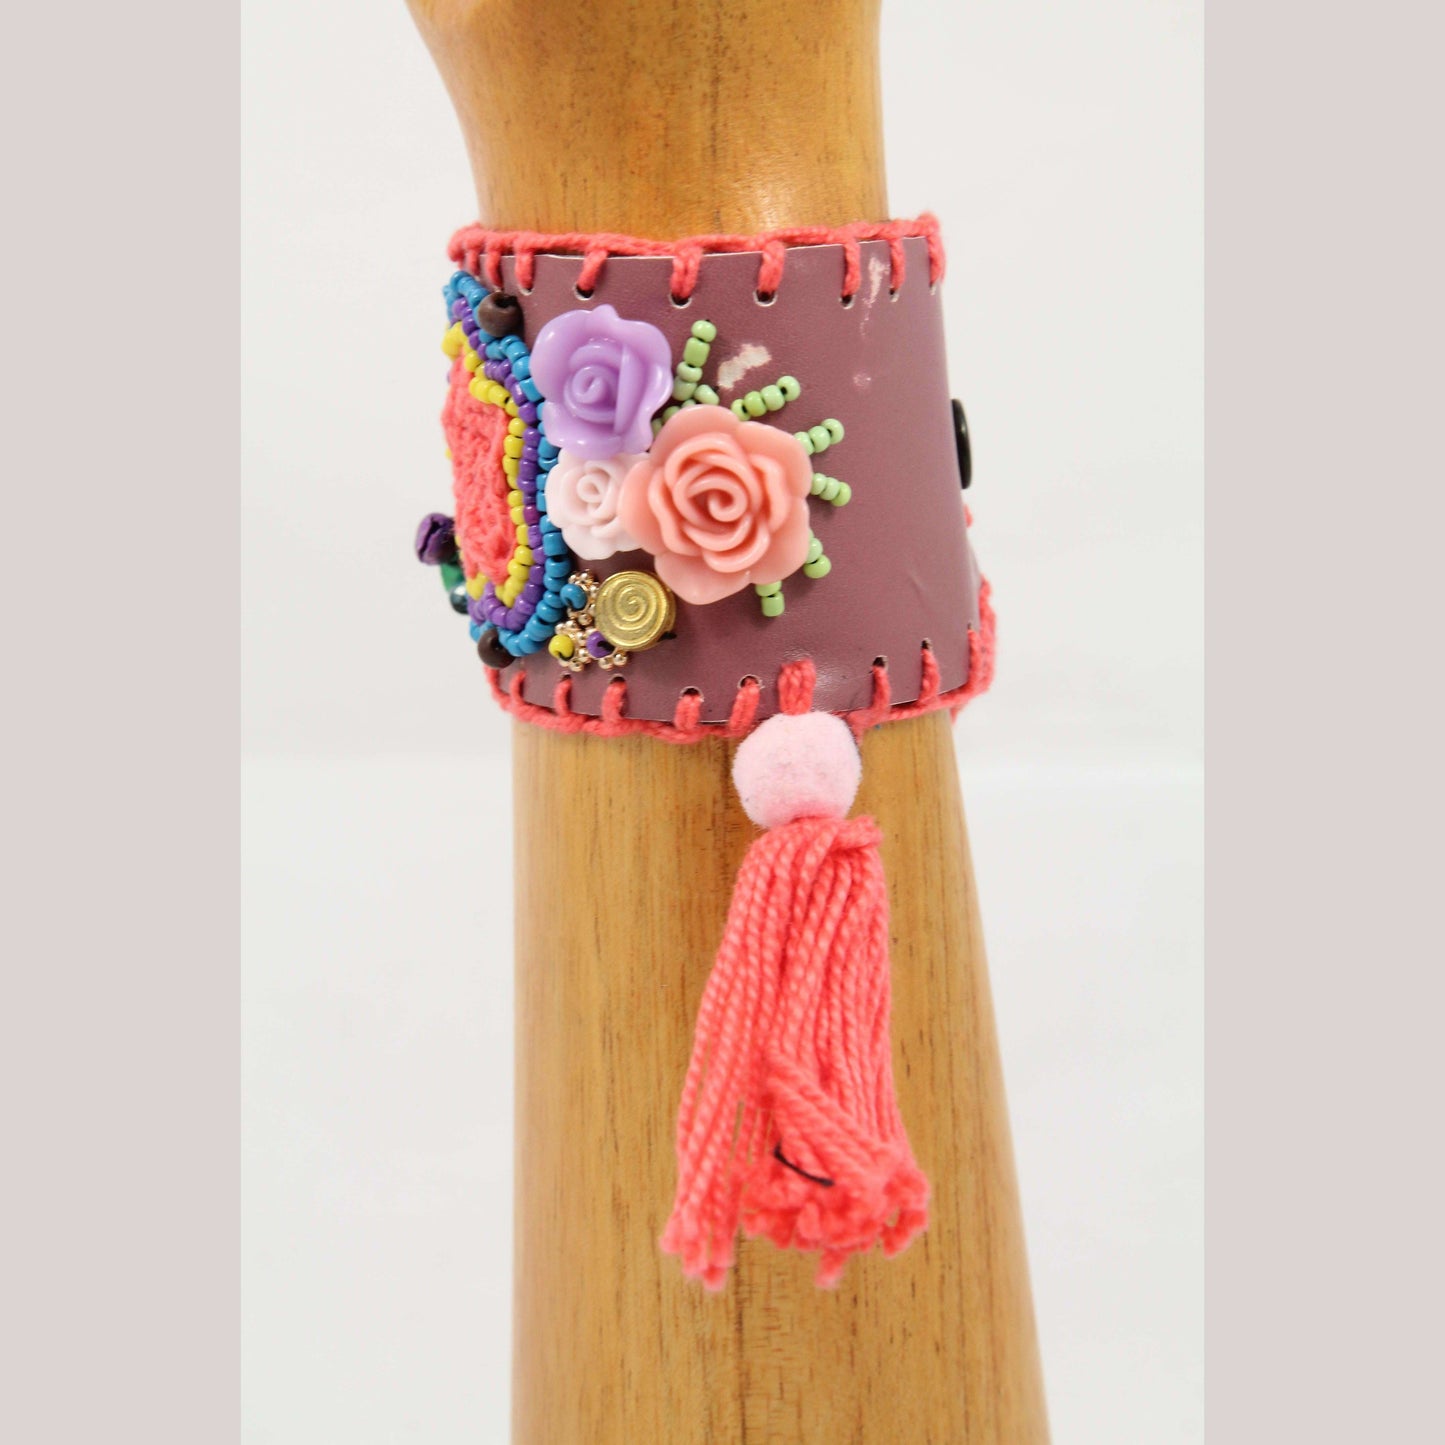 Mexican Bracelet Folk Art Bohemian/Hippie Costume Jewelry Charms Faux Leather #2